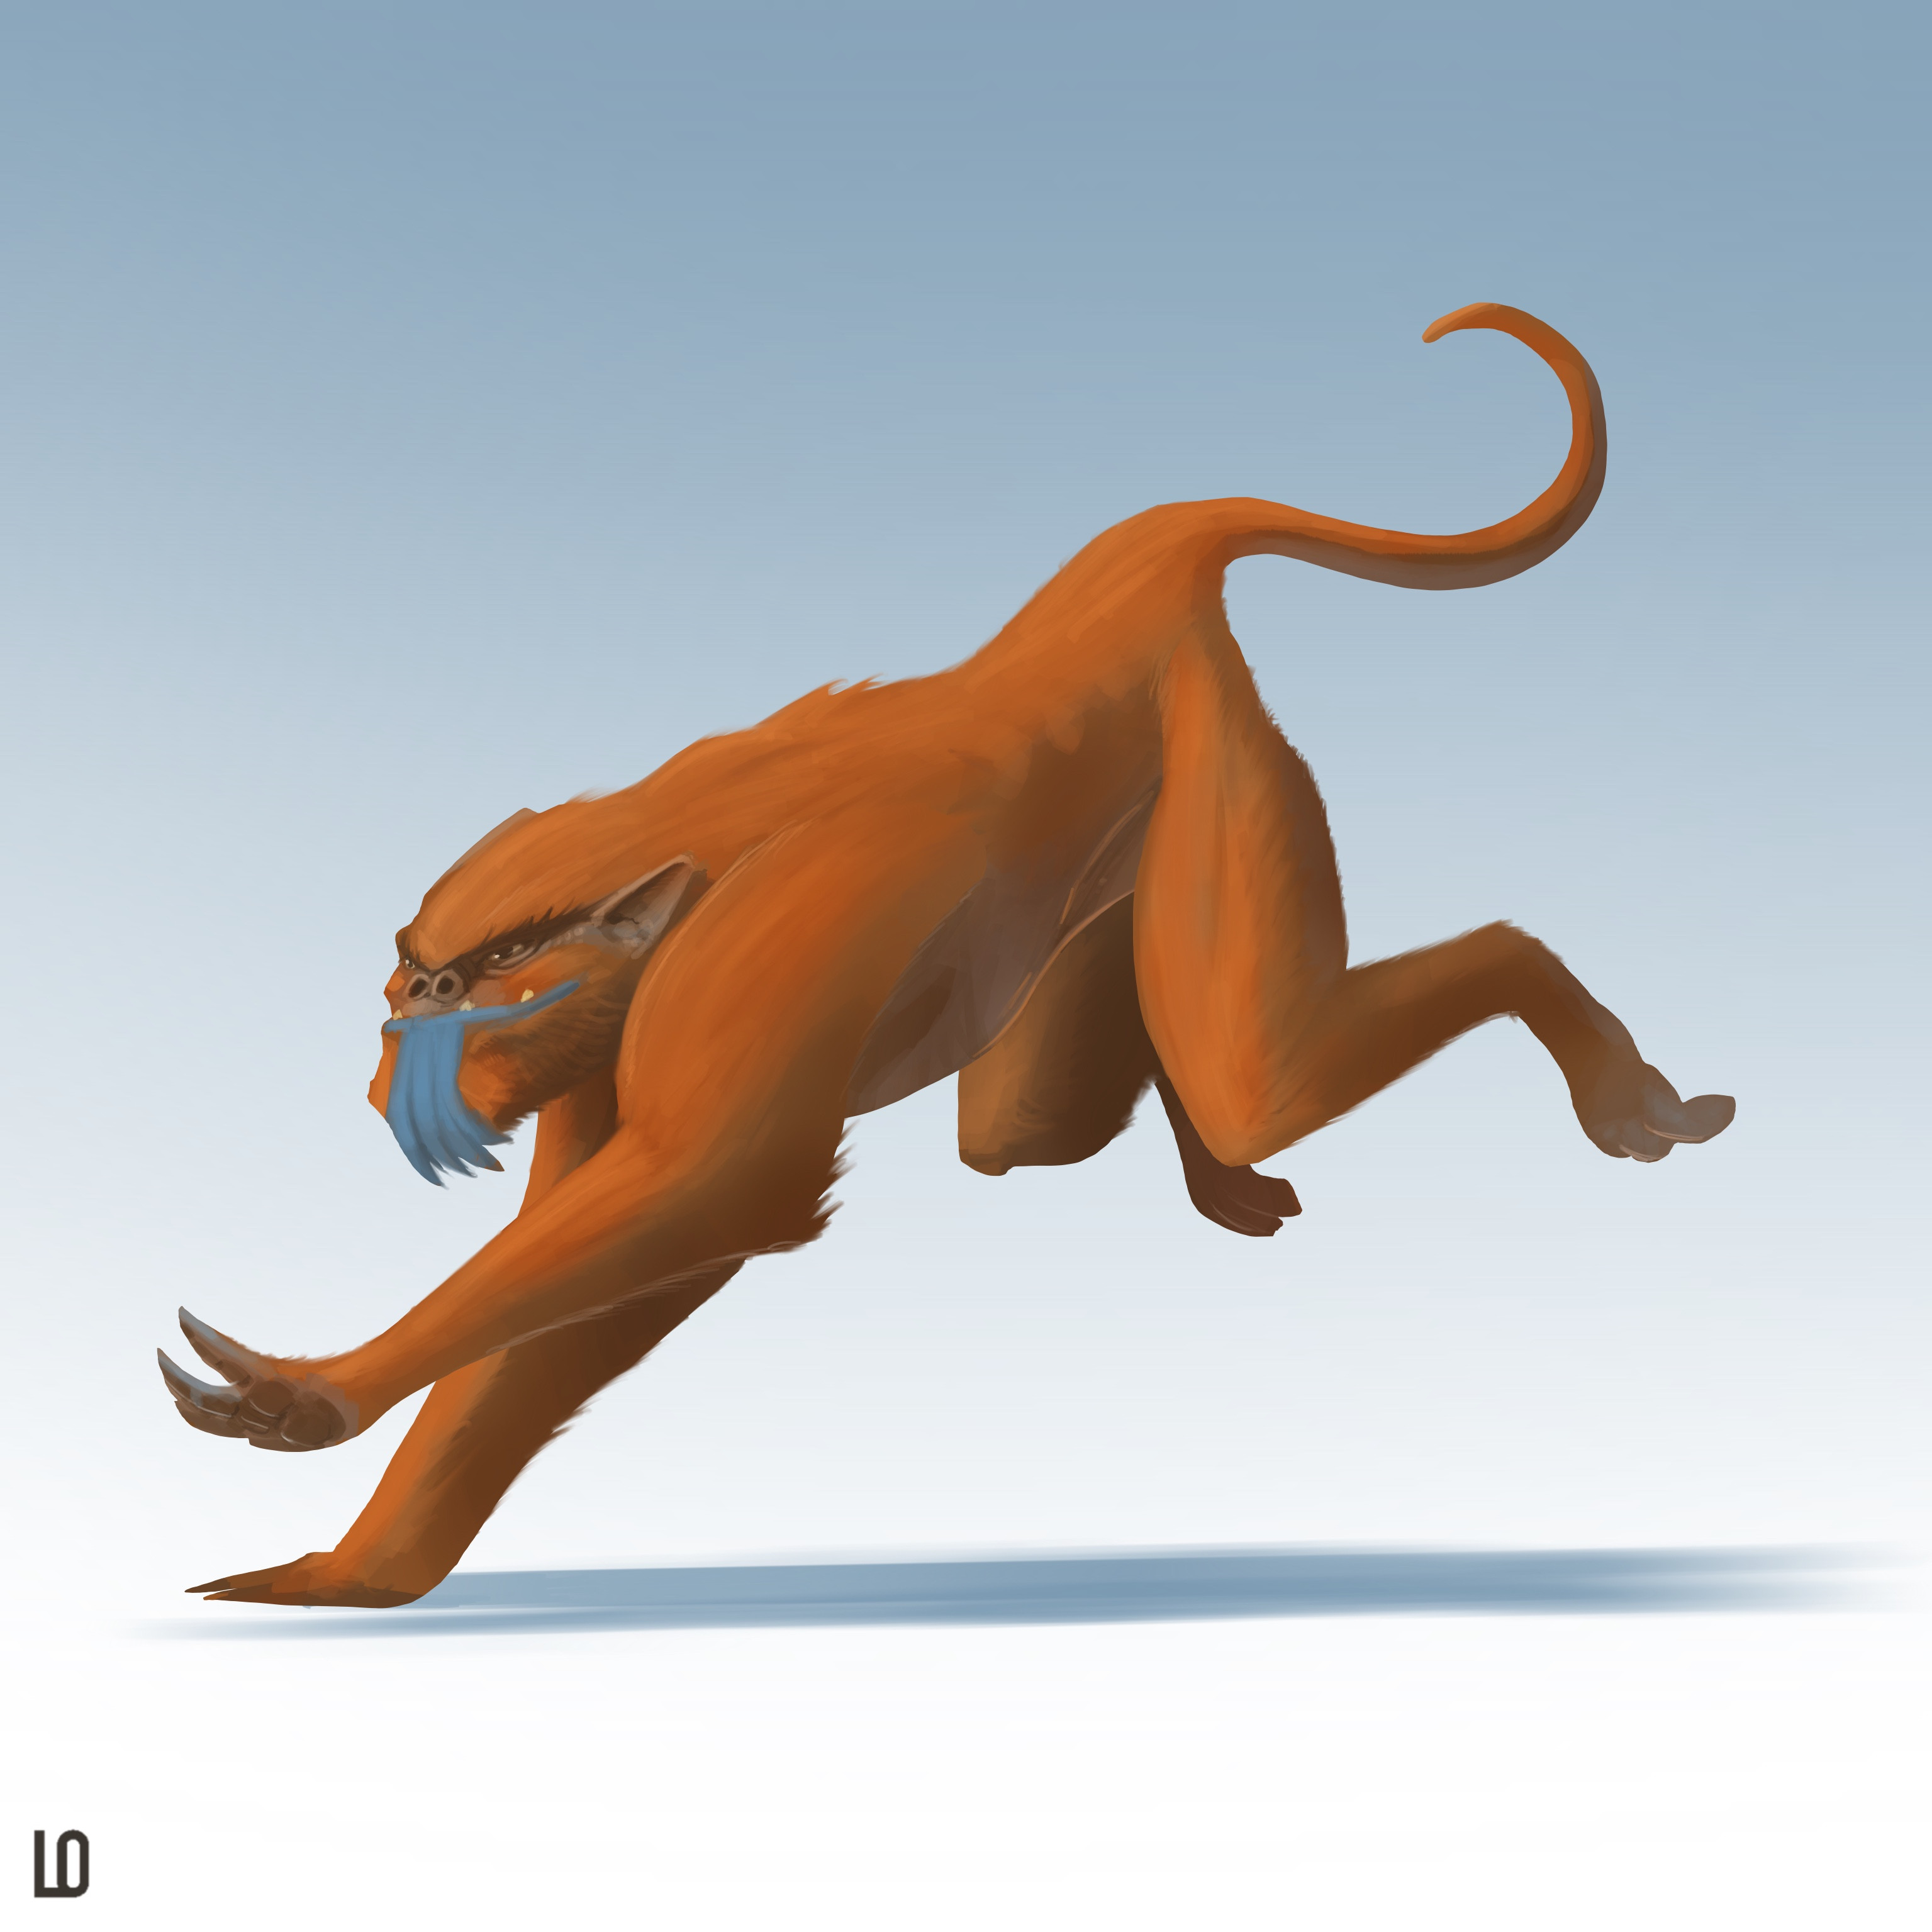 Running monkey